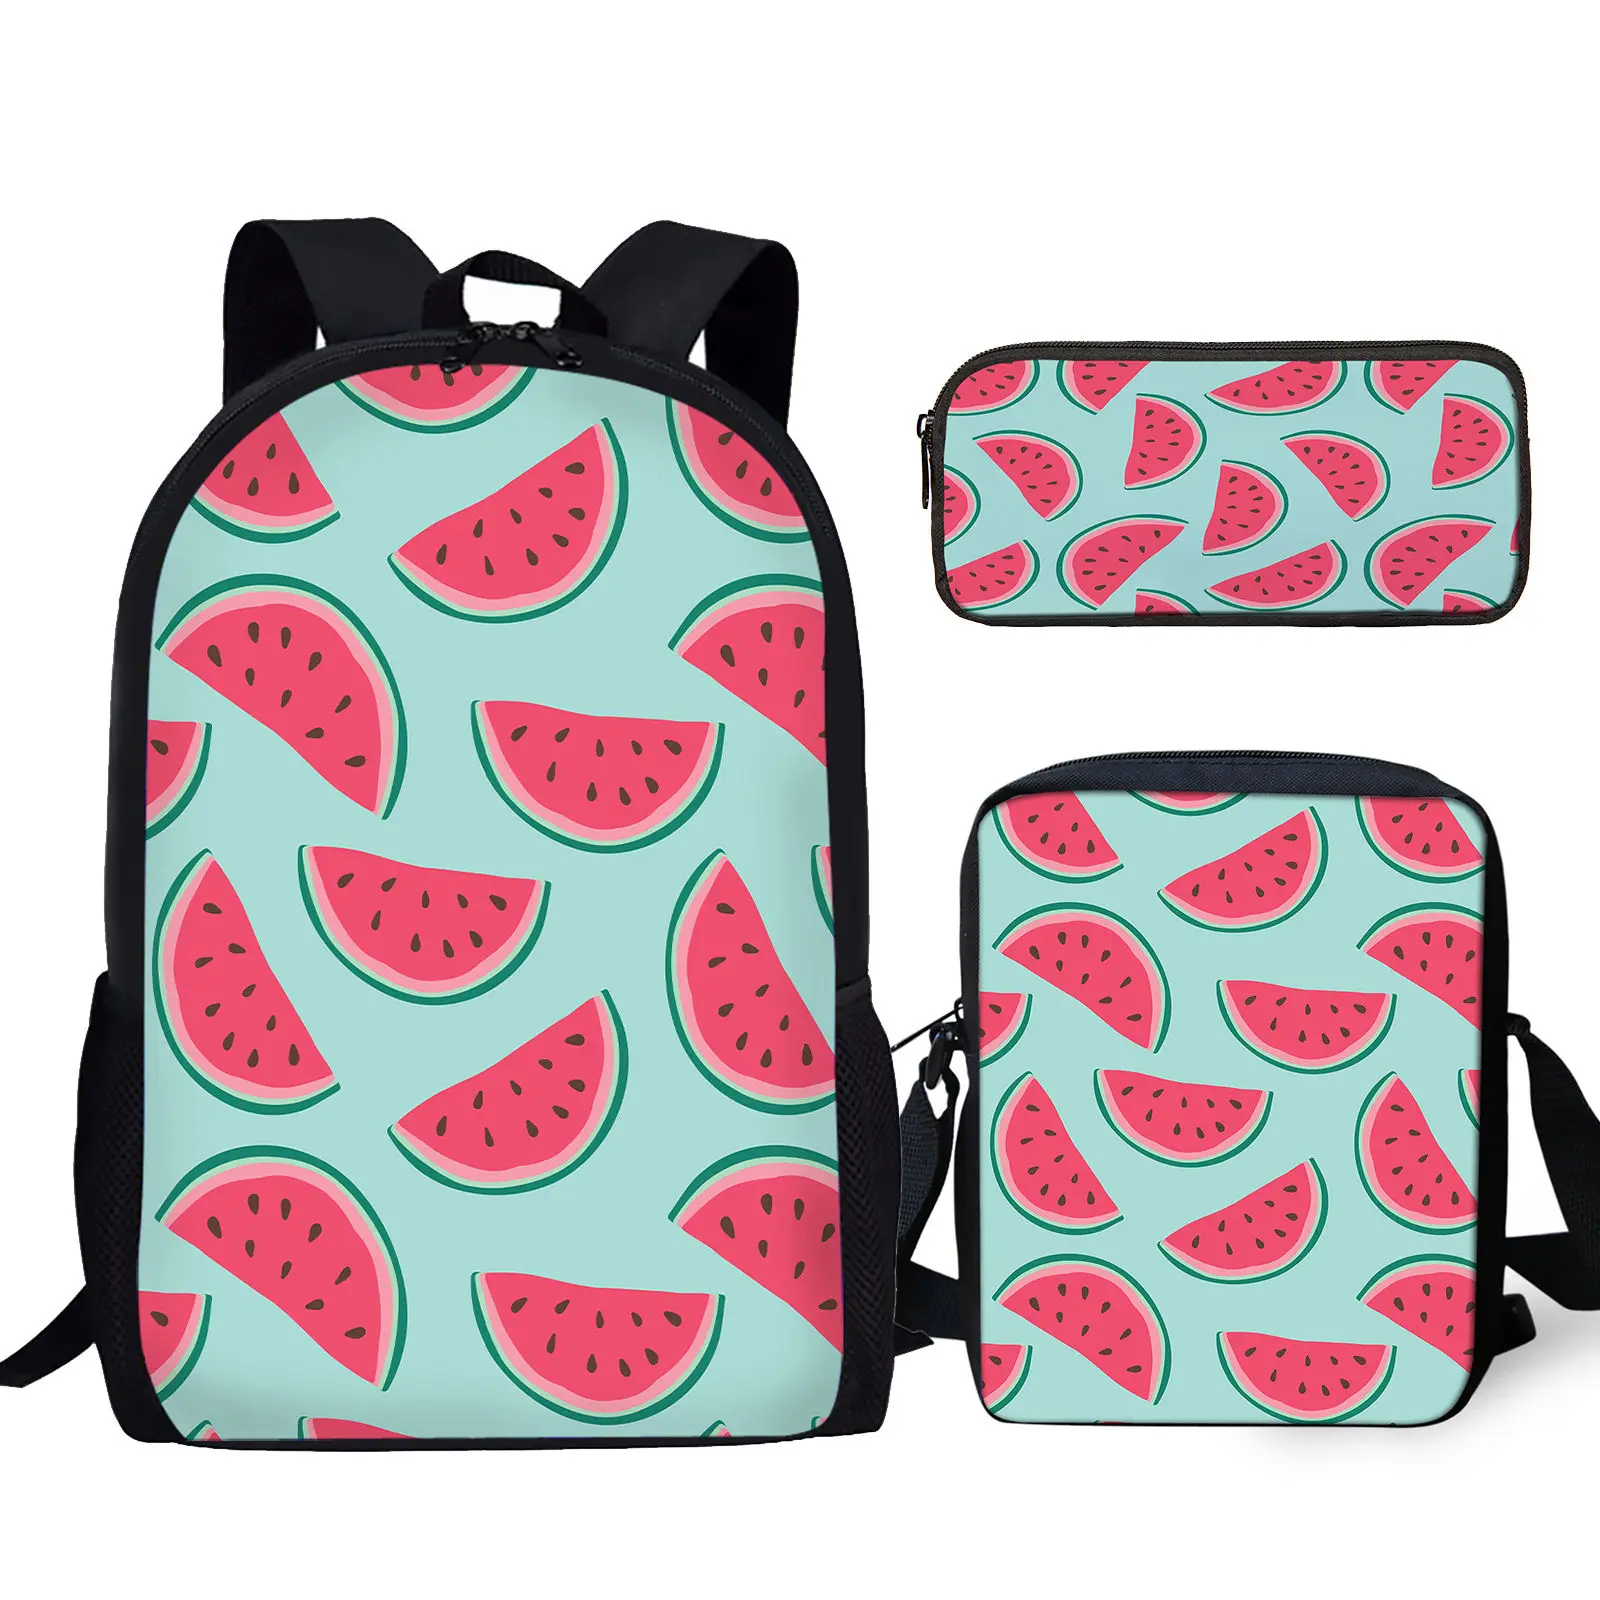 

YIKELUO Cartoon Watermelon Design Light Blue Shoulder Bag Fruit Print Student Textbook Knapsack Casual Messenger Bag With Zipper